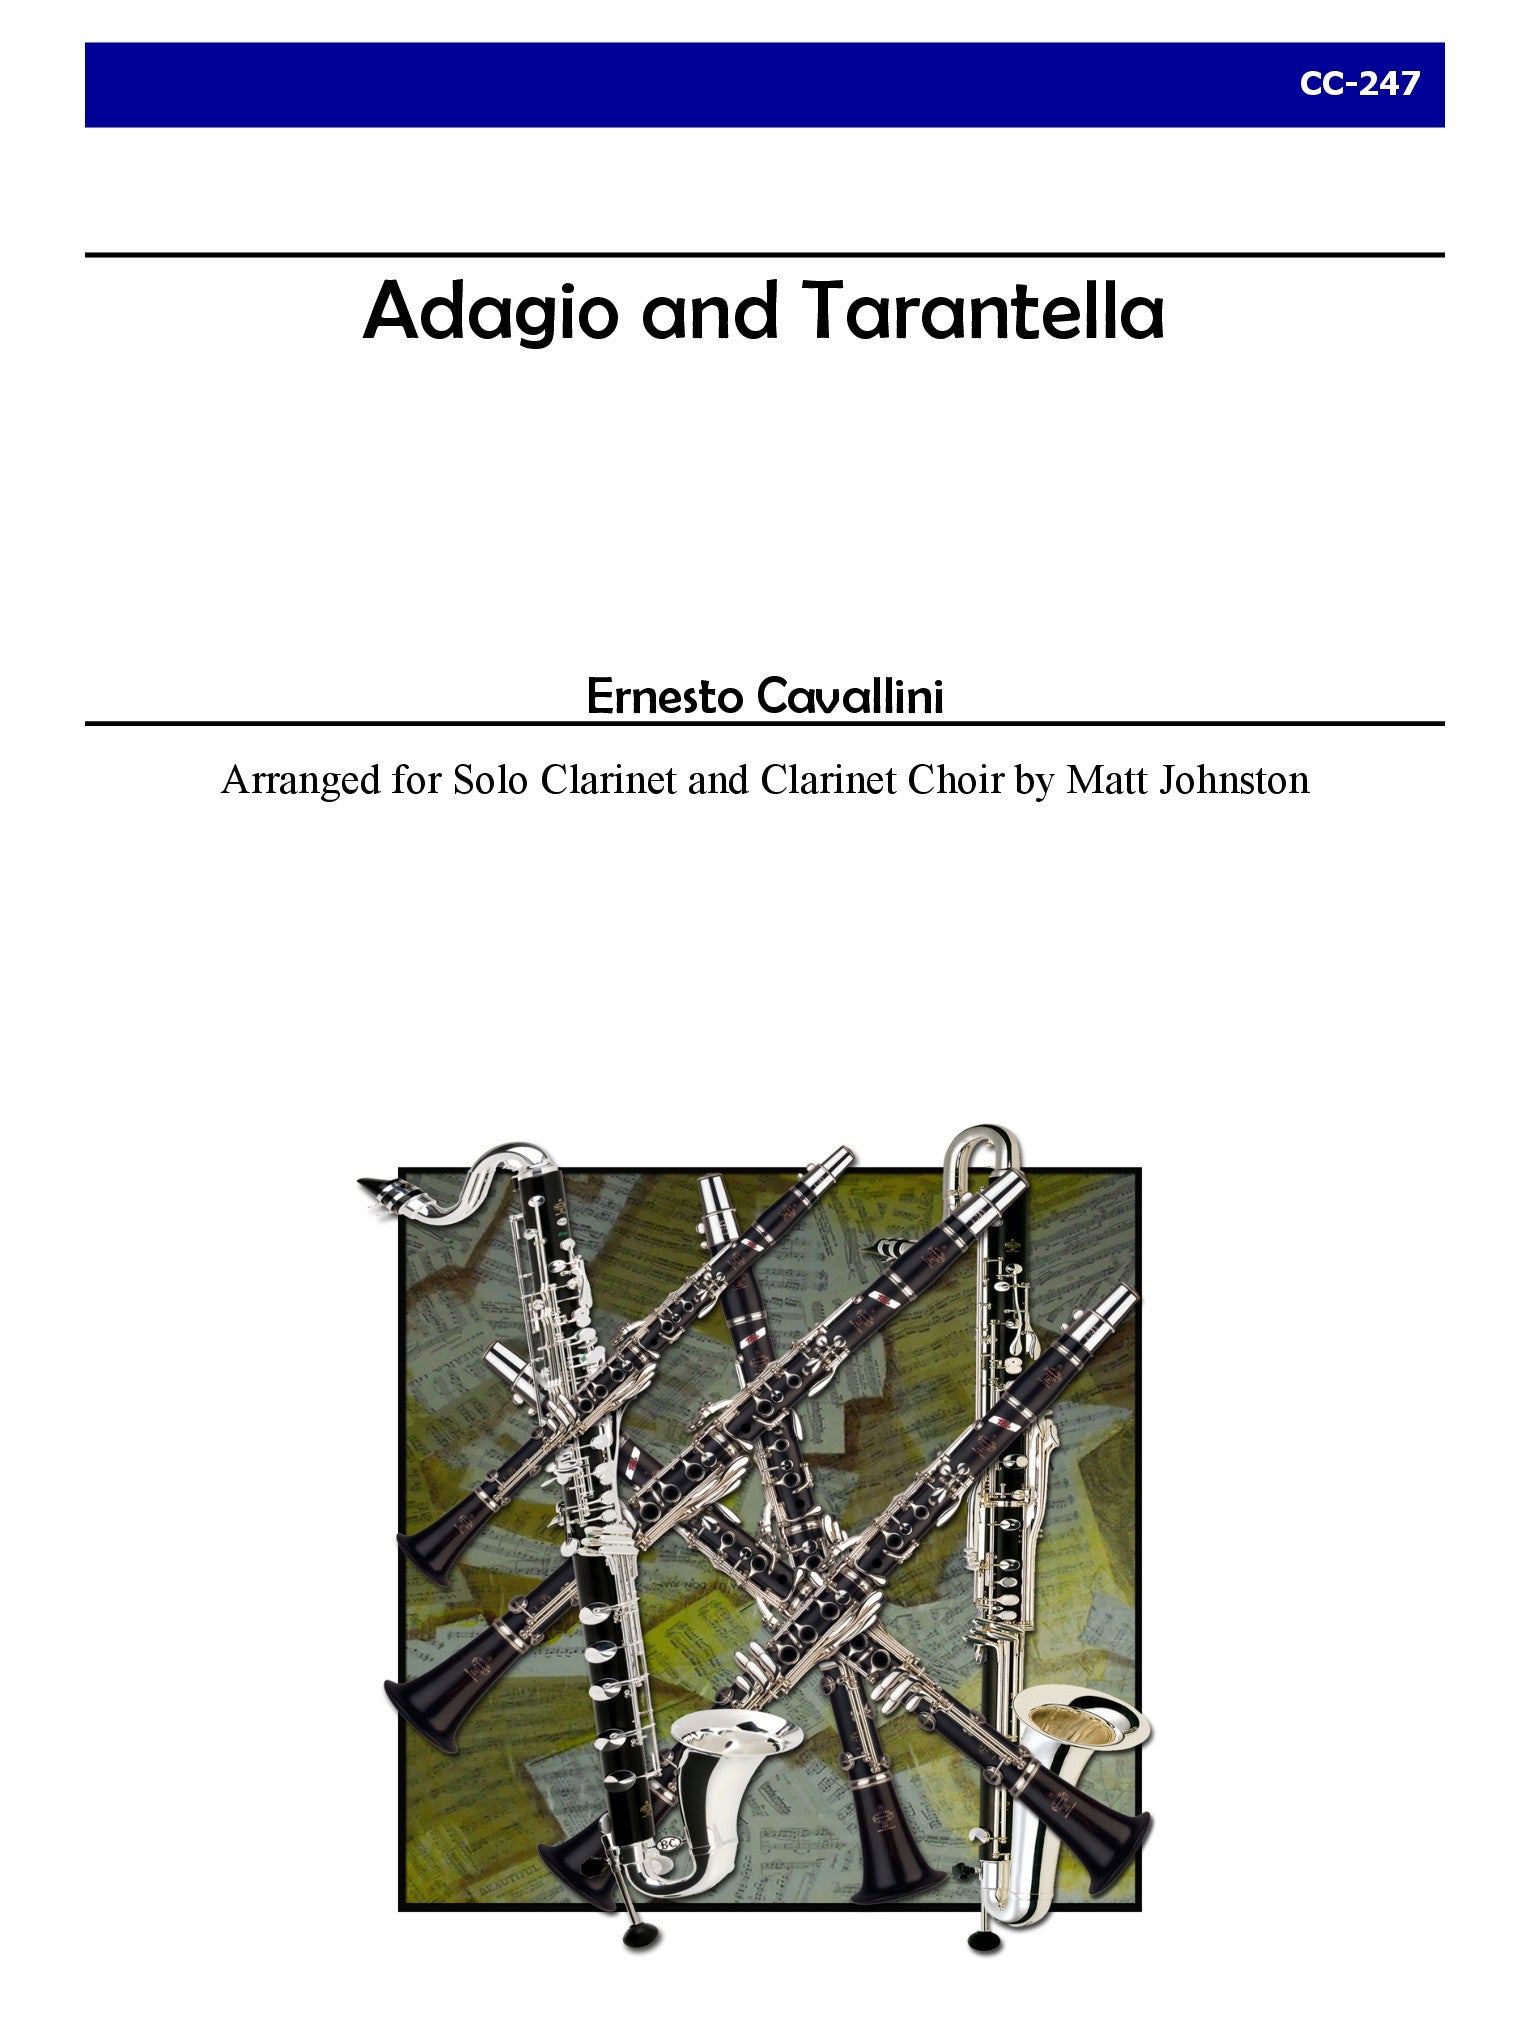 Cavallini (arr. Matt Johnston) - Adagio and Tarantella for Solo Clarinet and Clarinet Choir